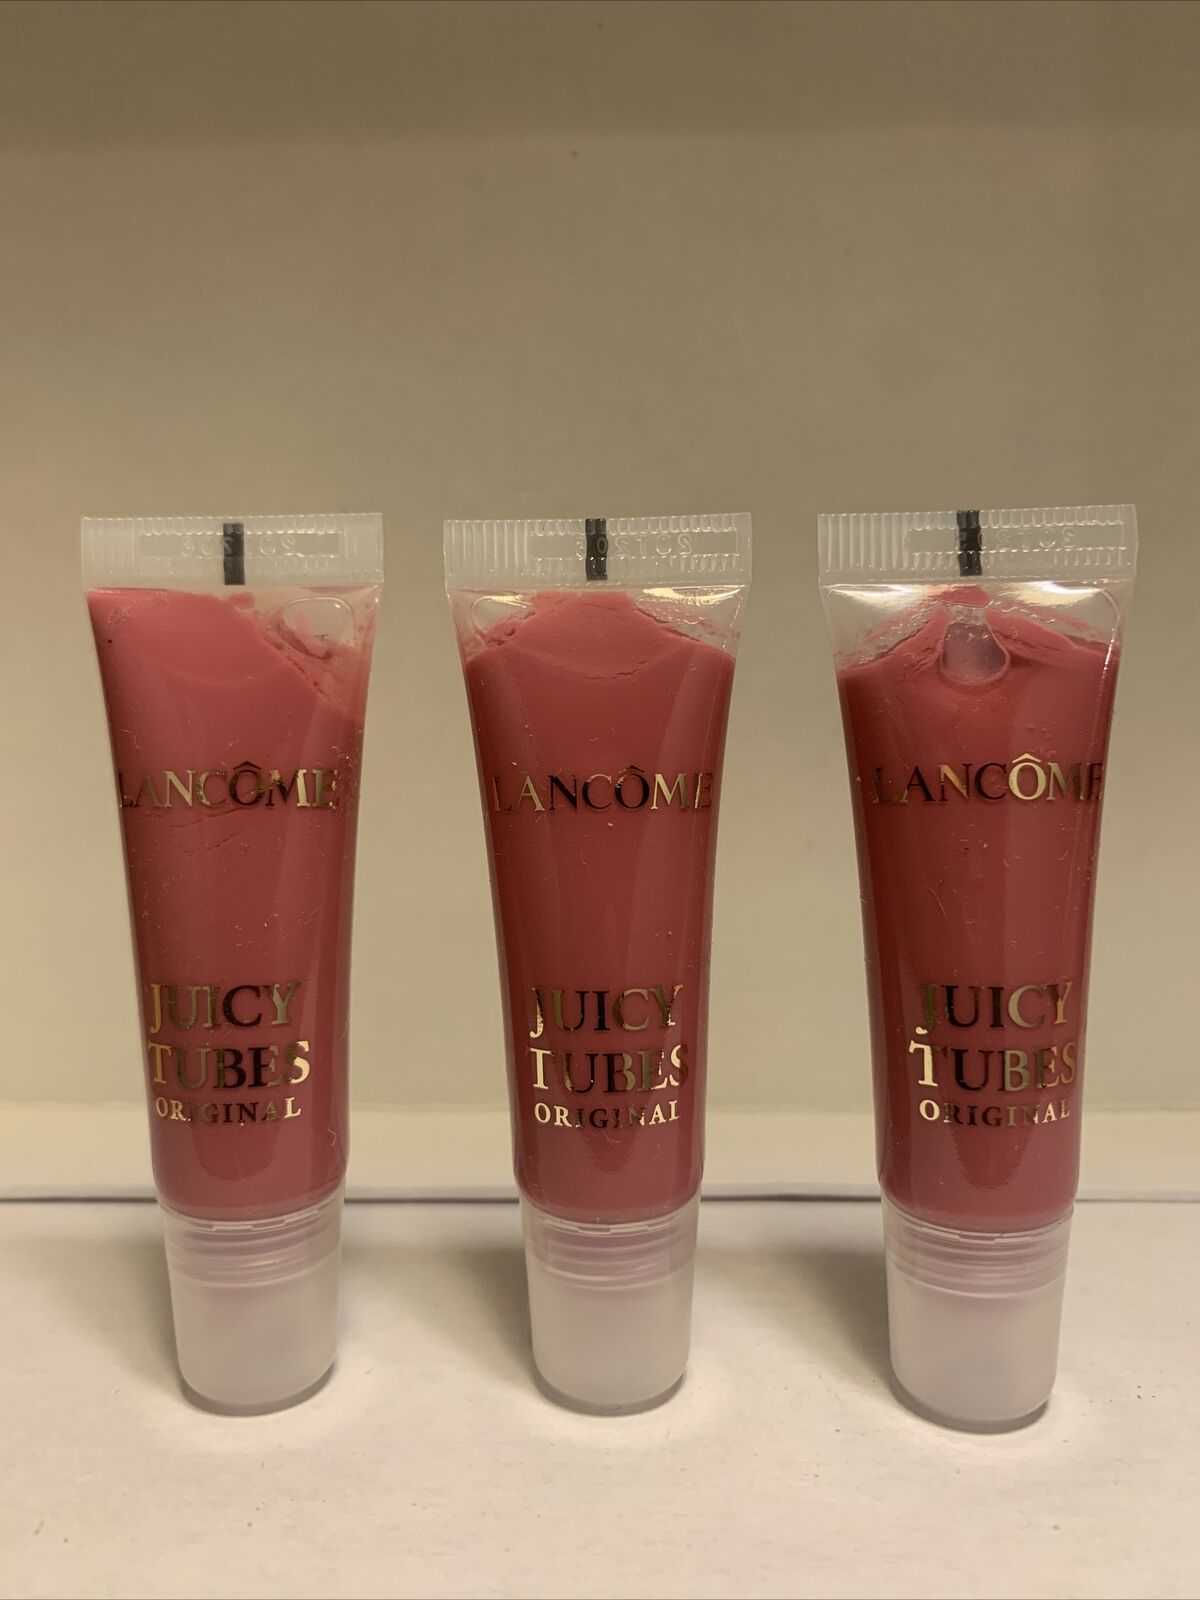 LANCOME Juicy Tubes Original lip gloss Tickled Pink travel lot 0.33 oz 10 ml x 3 Lancôme Tubes